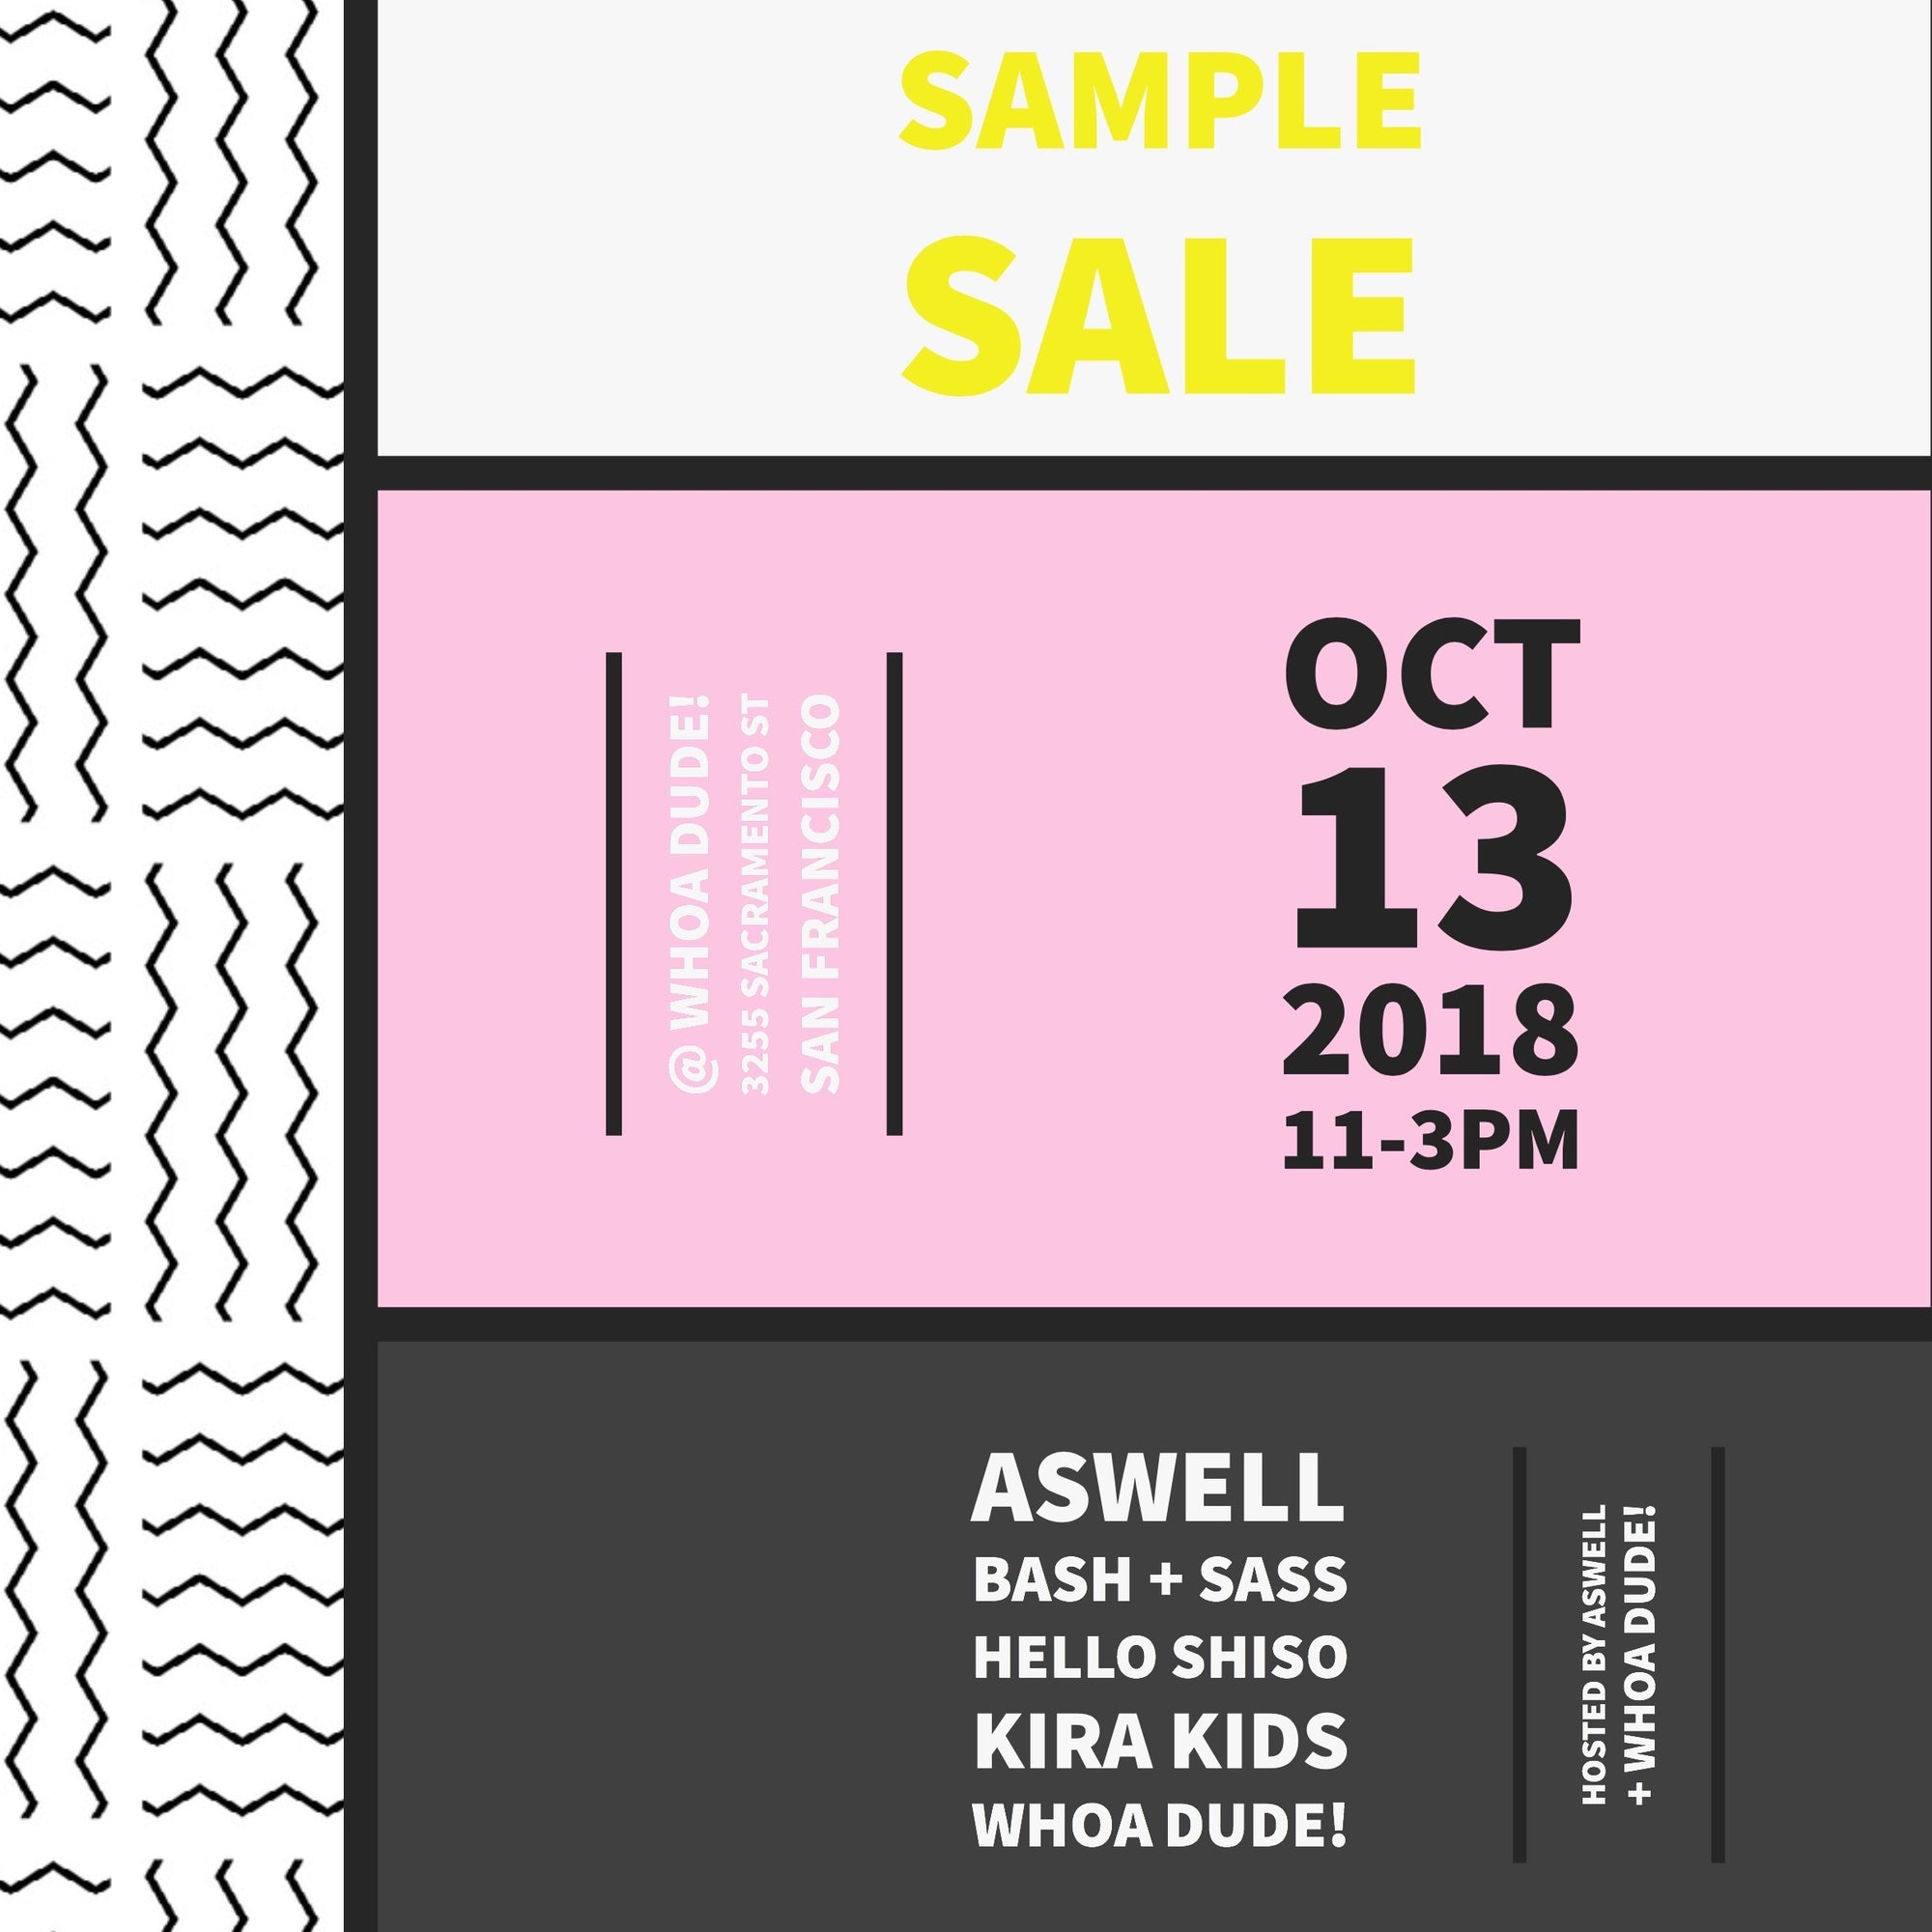 Oct 13: SF Kids Sample Sale